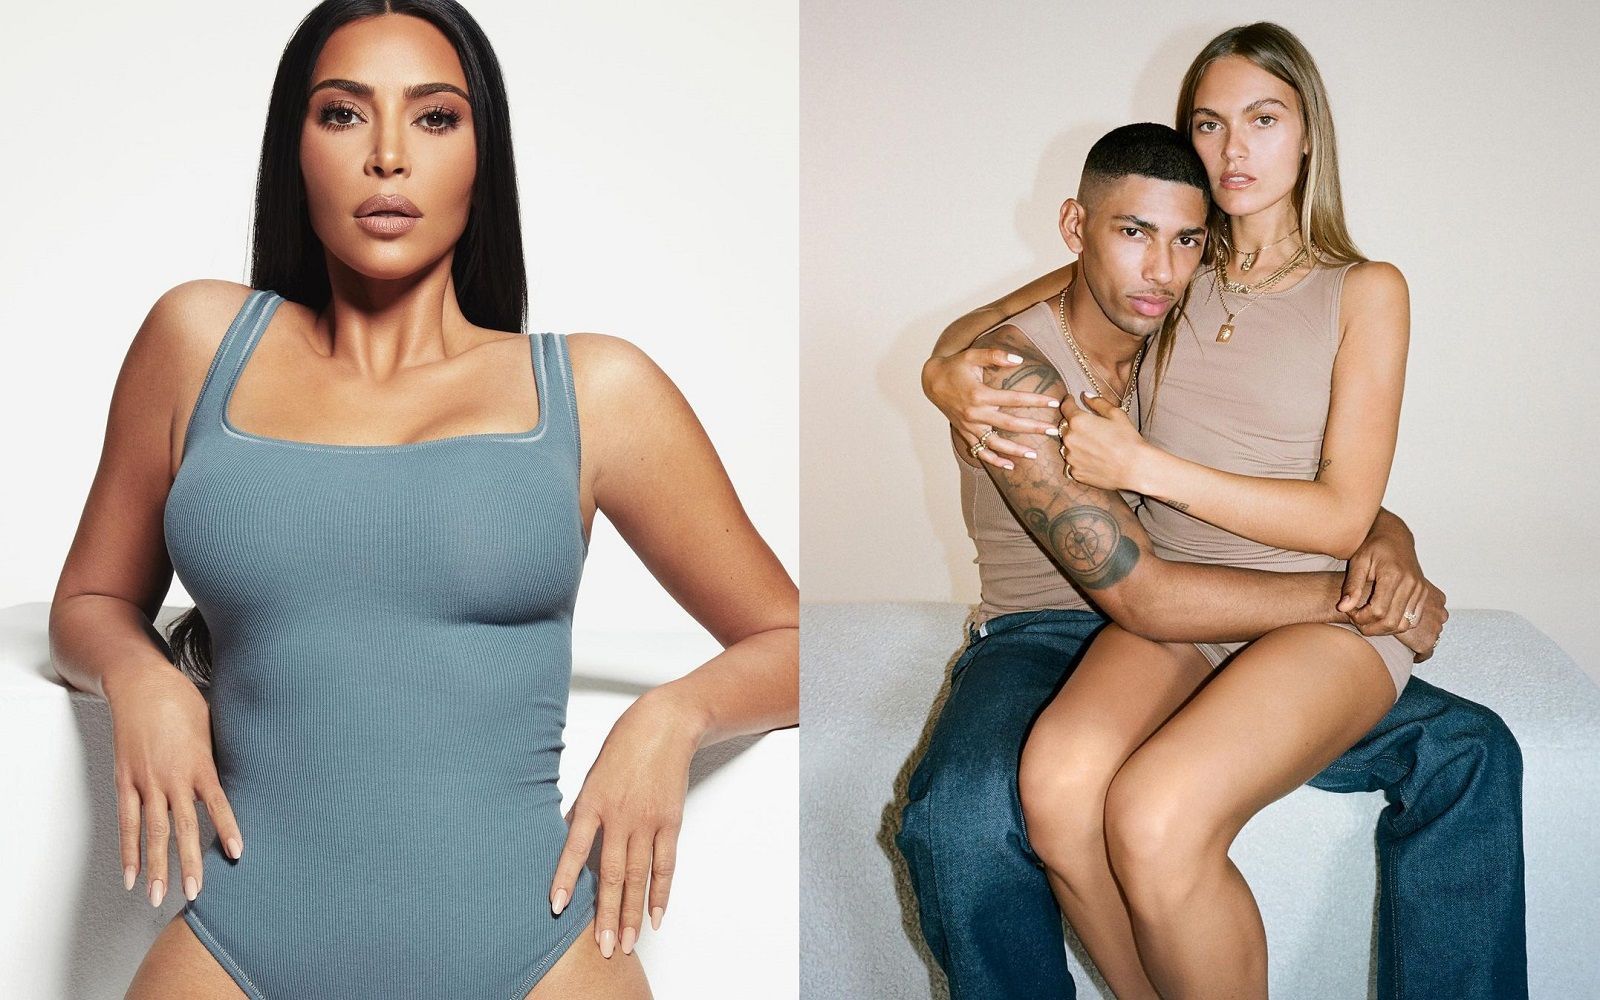 SKIMS founder Kim Kardashian is expanding her shapewear line for men